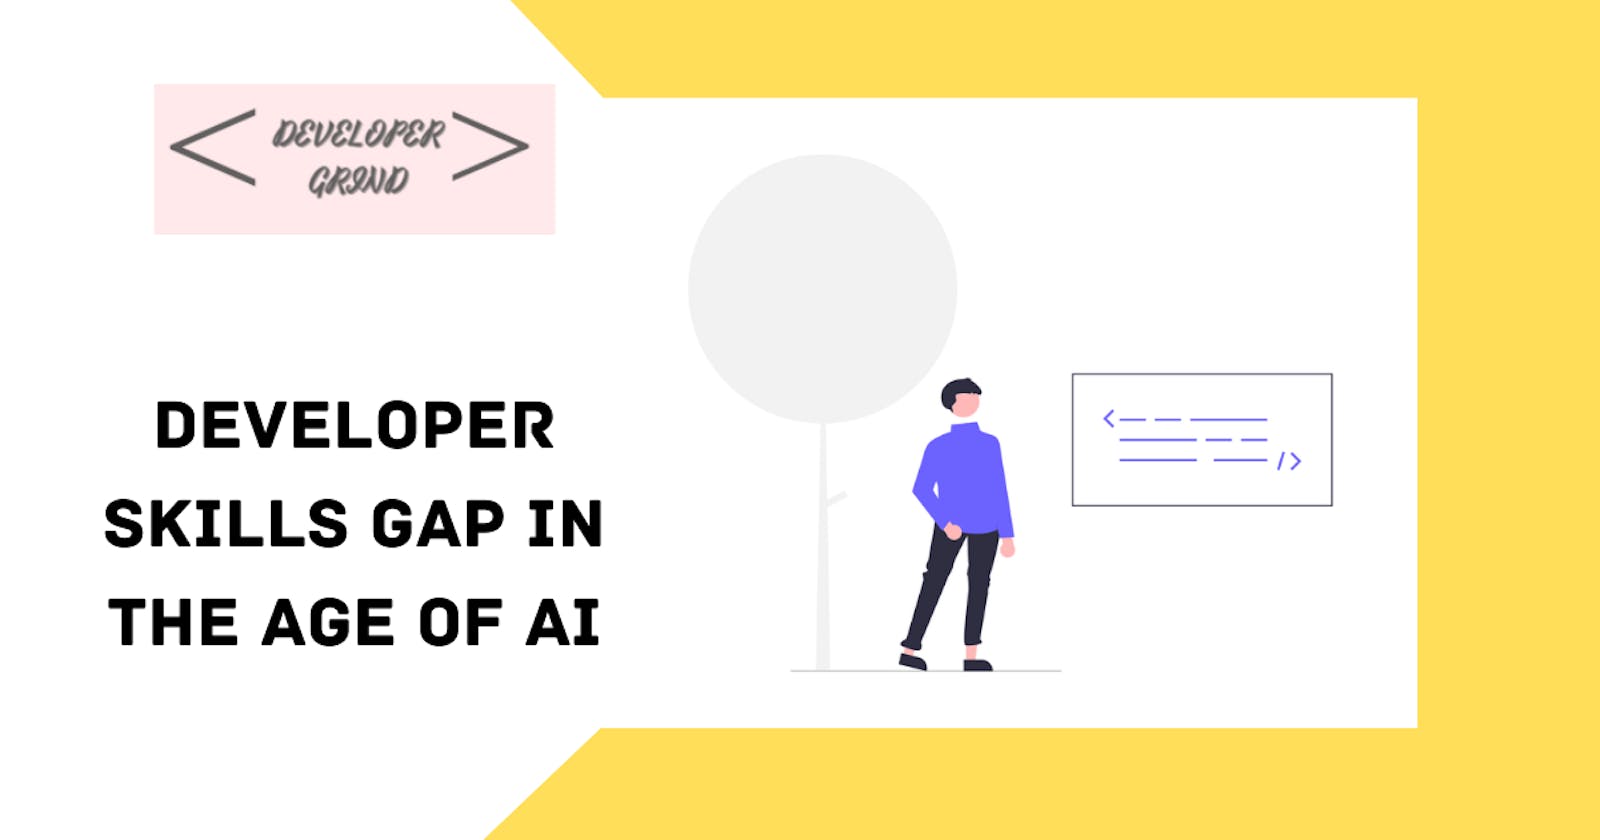 The Developer Skills gap in the age of AI